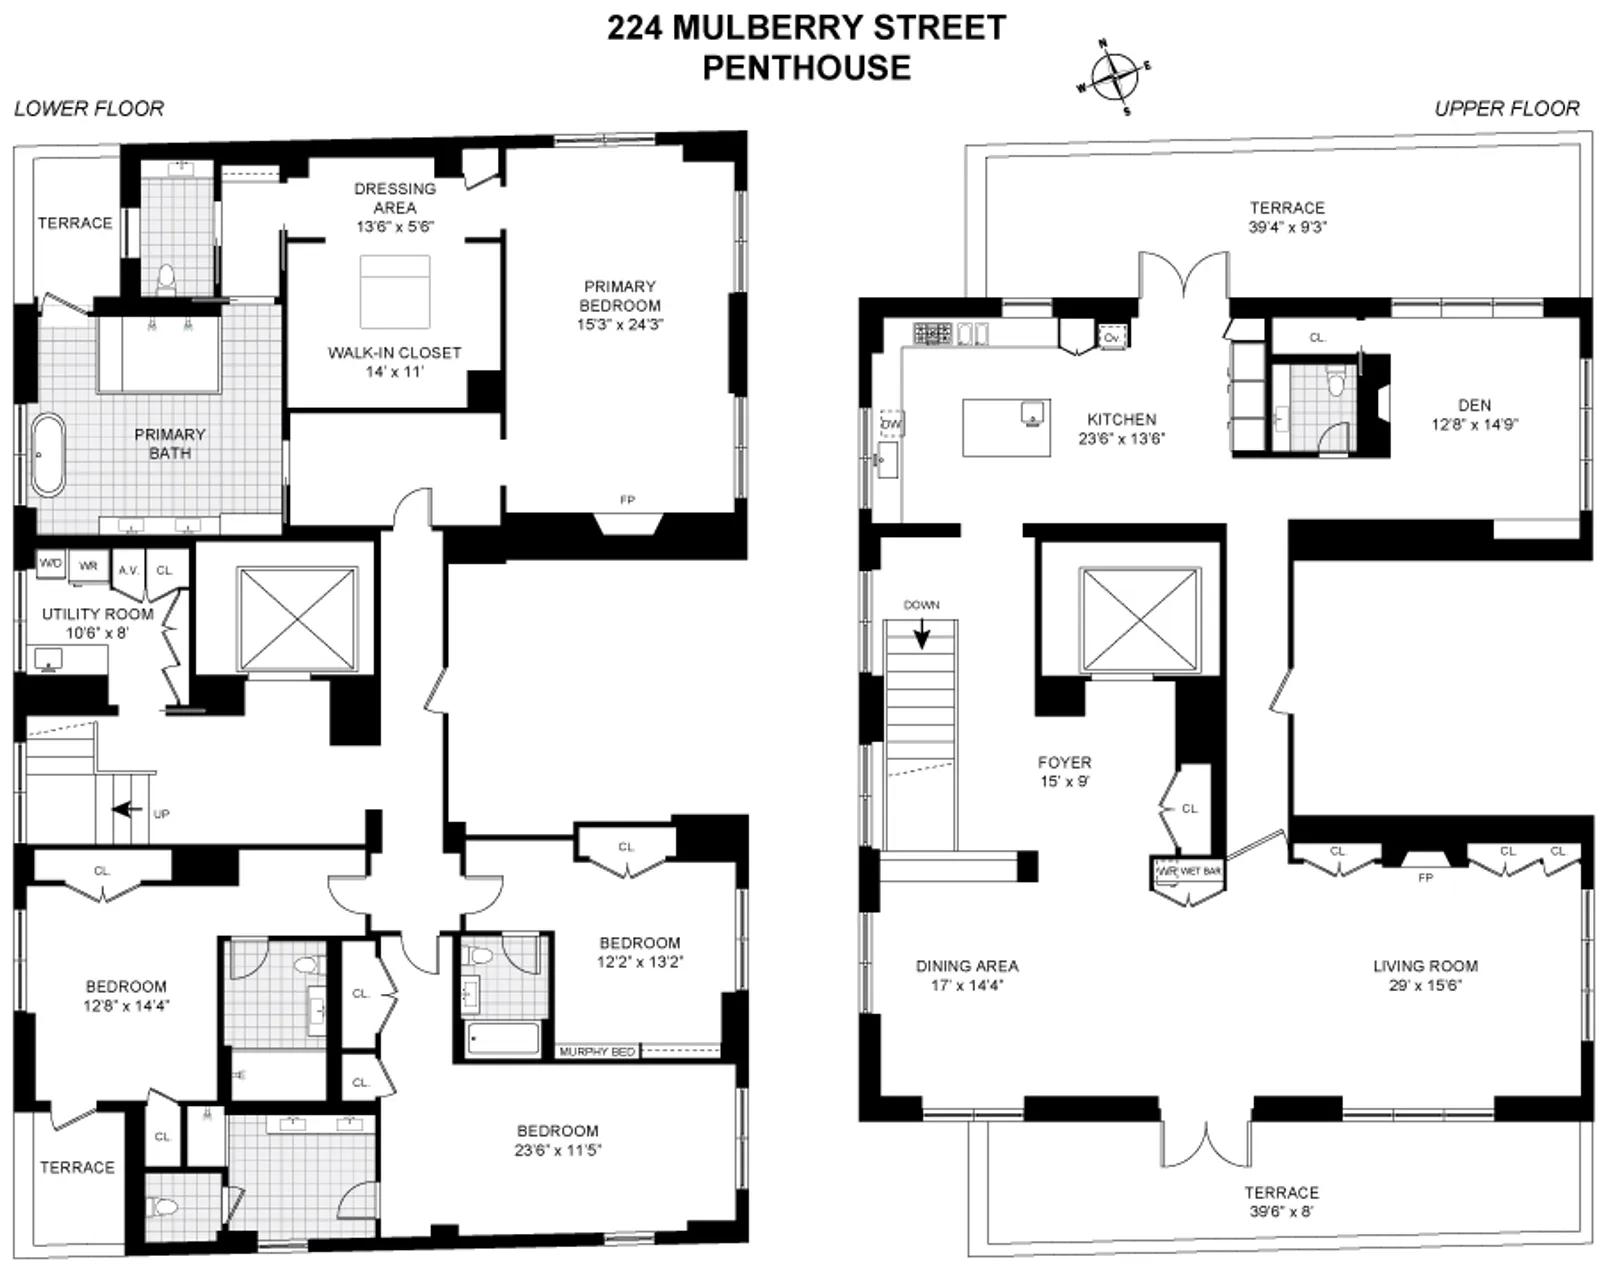 224 Mulberry Street, PH | floorplan | View 40